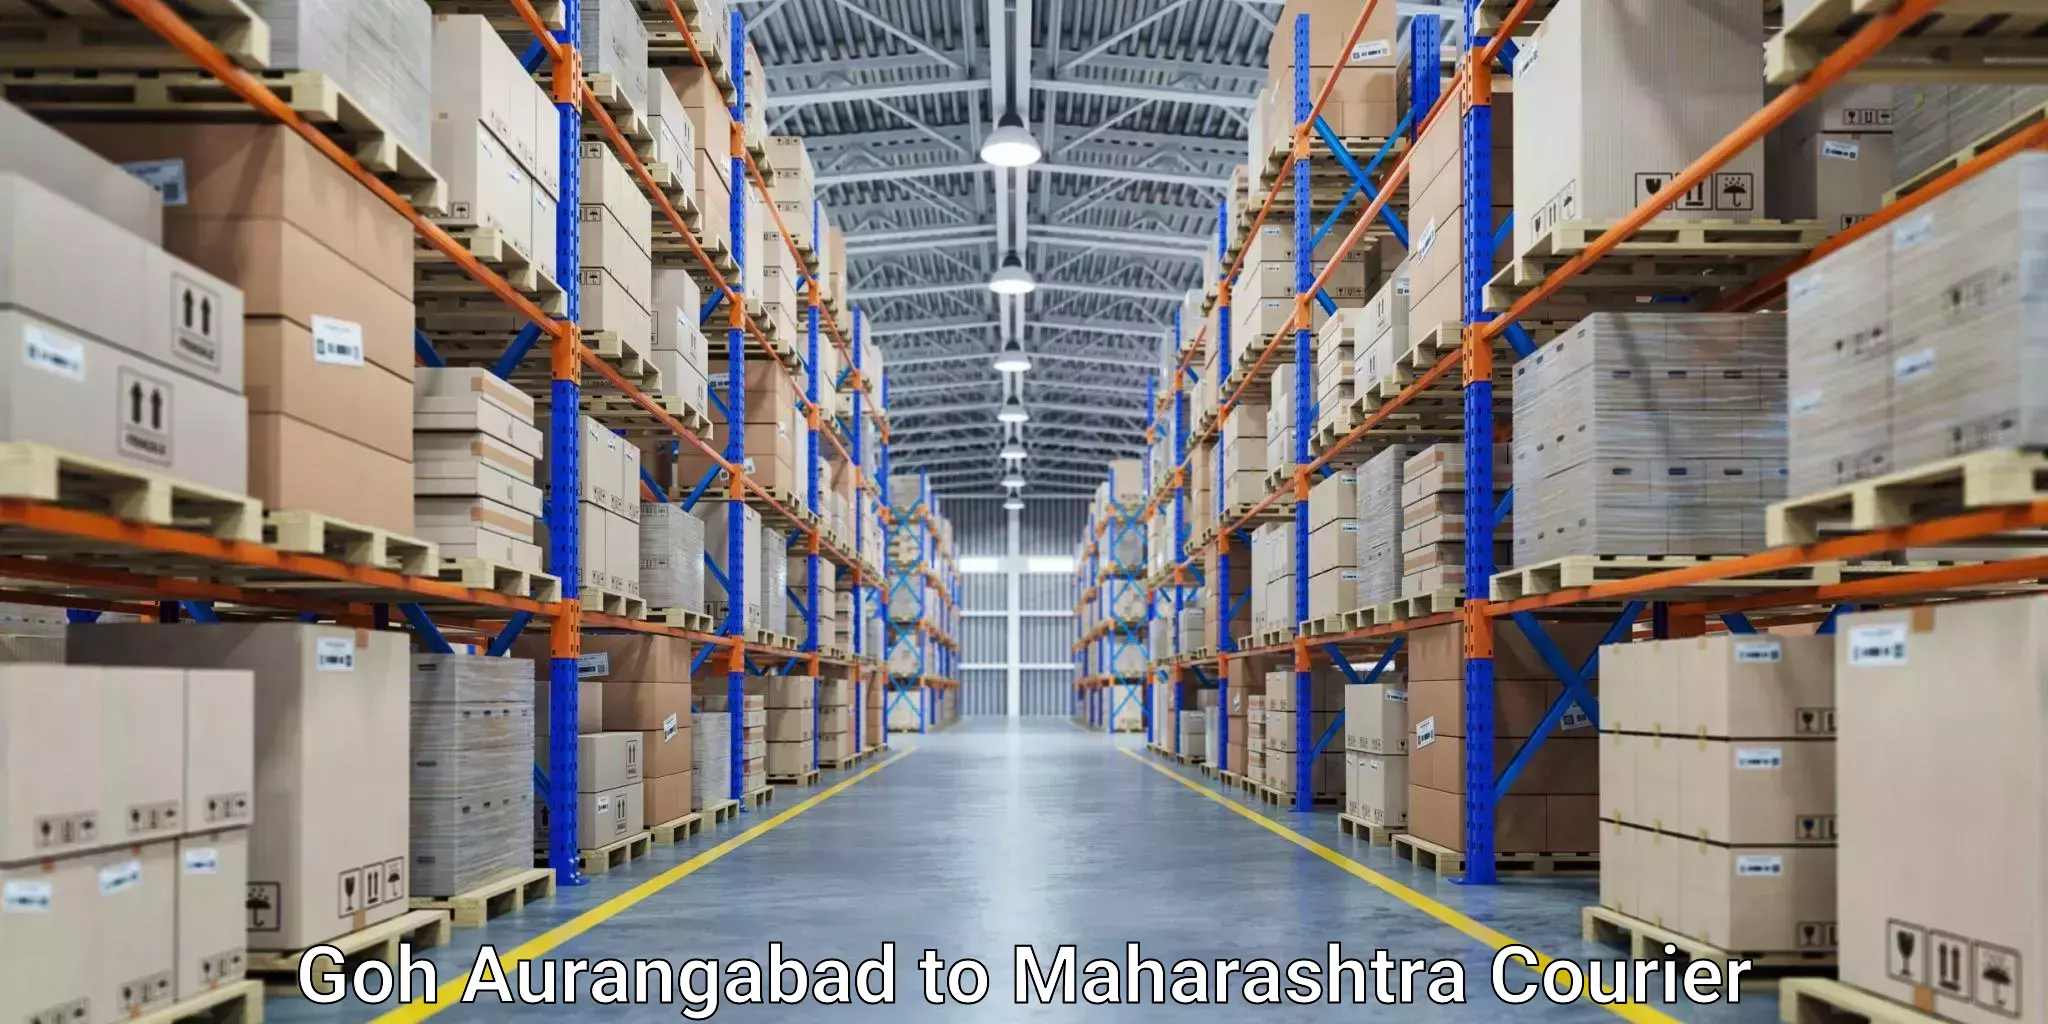 Logistics and distribution Goh Aurangabad to DY Patil Vidyapeeth Mumbai